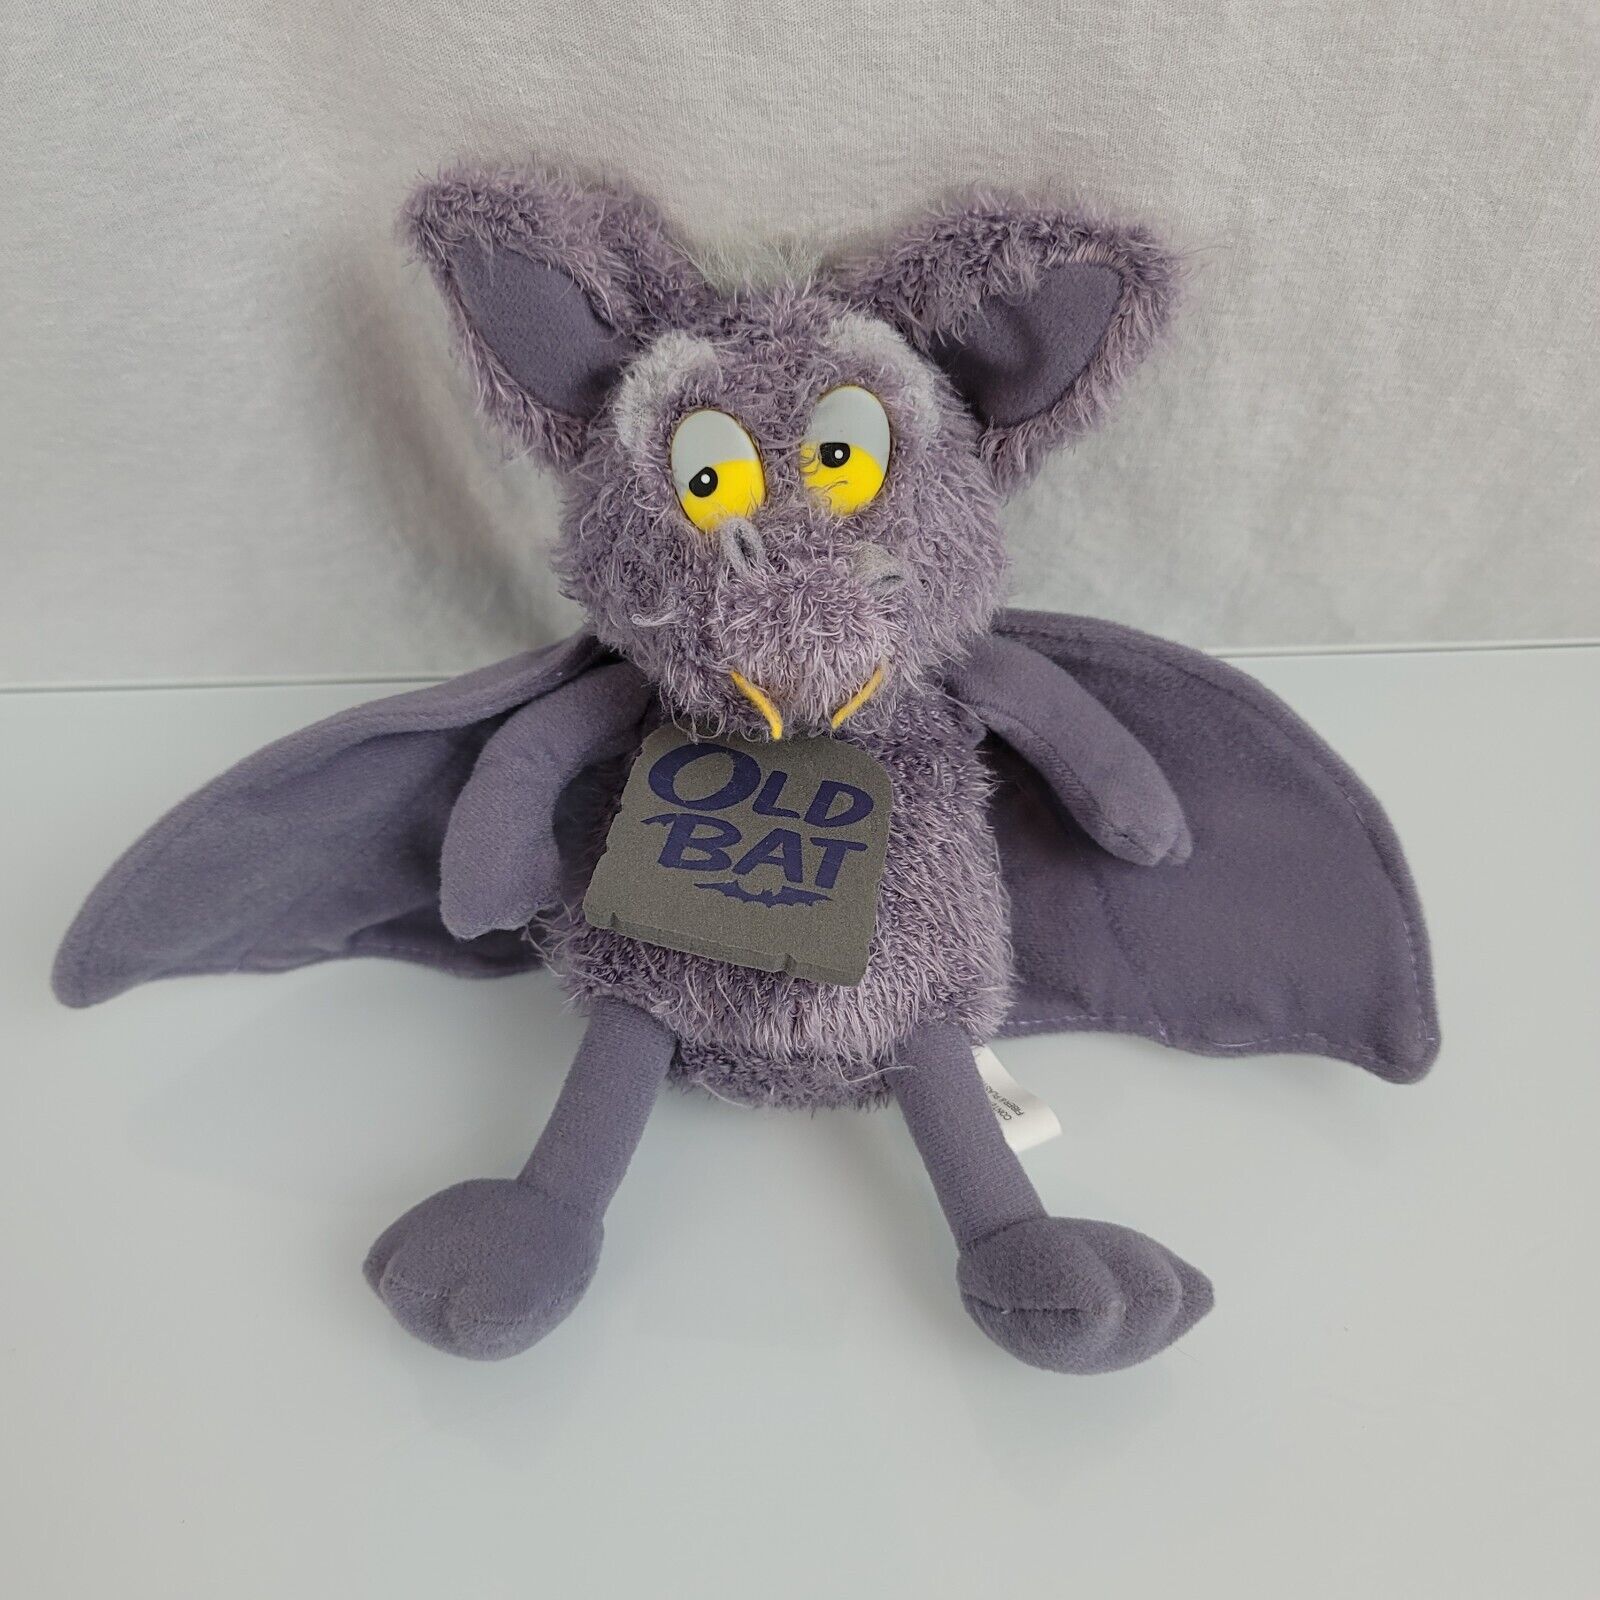 Primary image for Enesco 2000 Stuffed Plush Beanbag Bat "Old Bat" Purple Gray Gag Gift Toy 